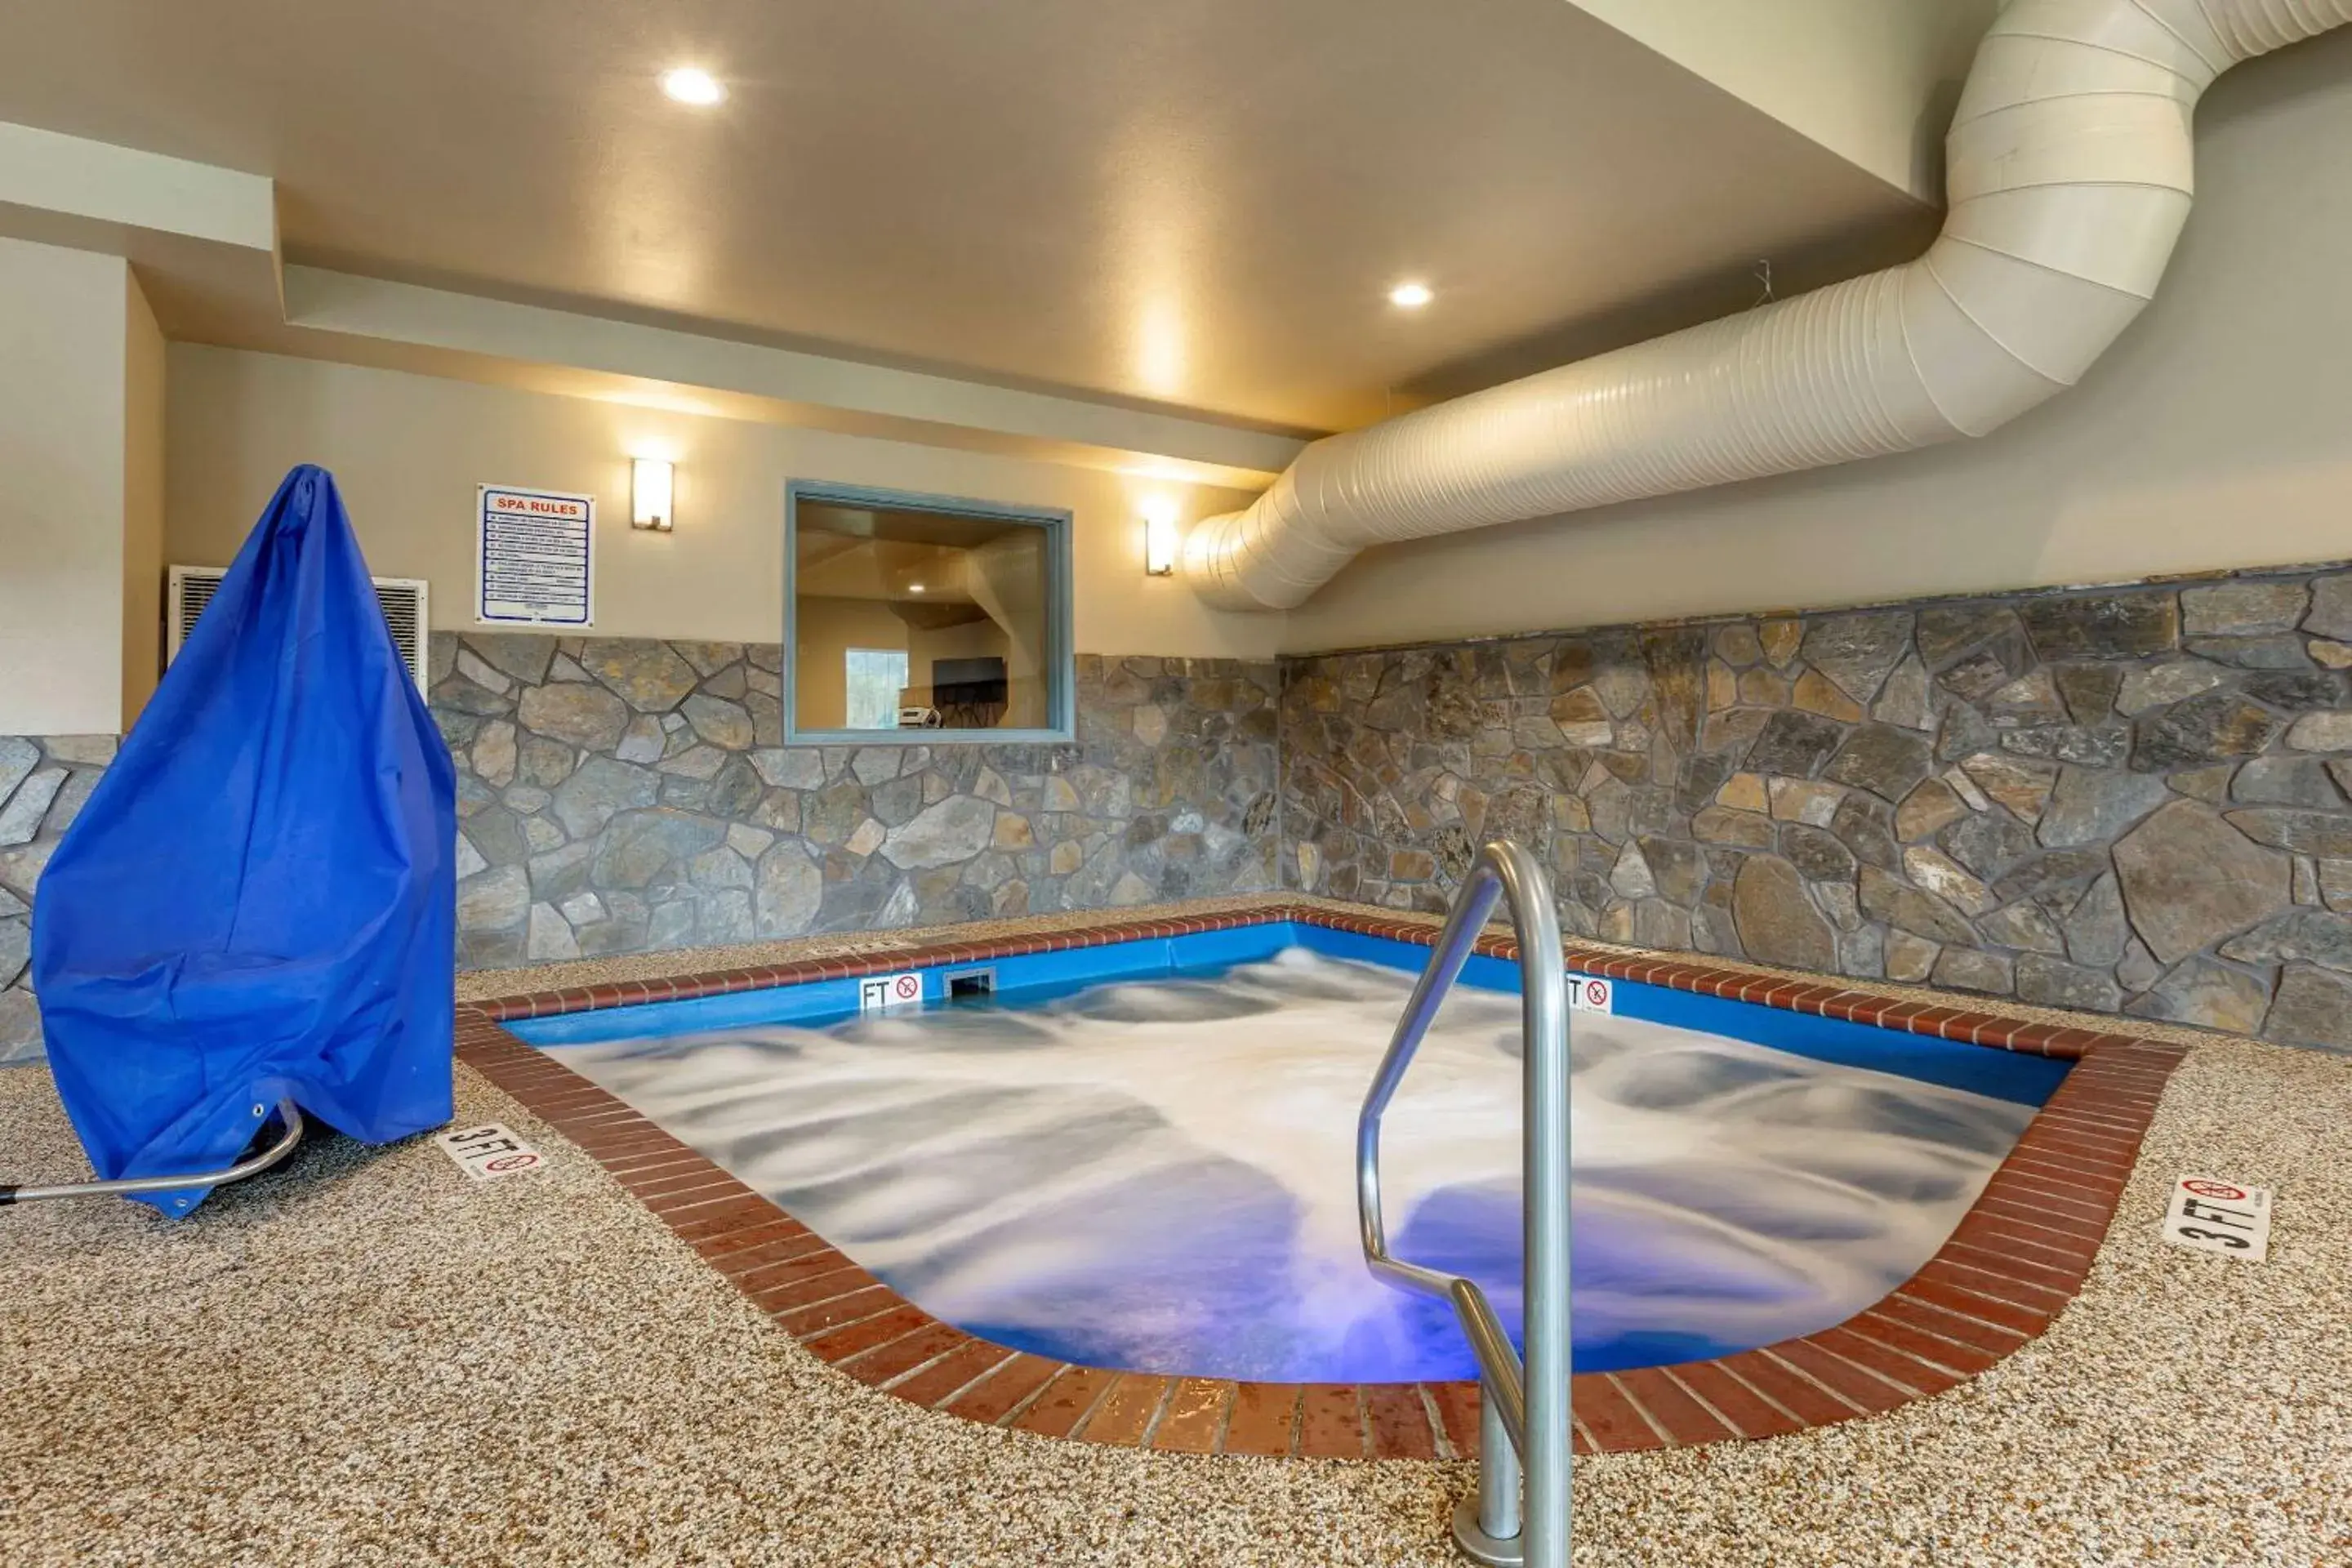 On site, Swimming Pool in Comfort Inn & Suites Near Mt. Rushmore